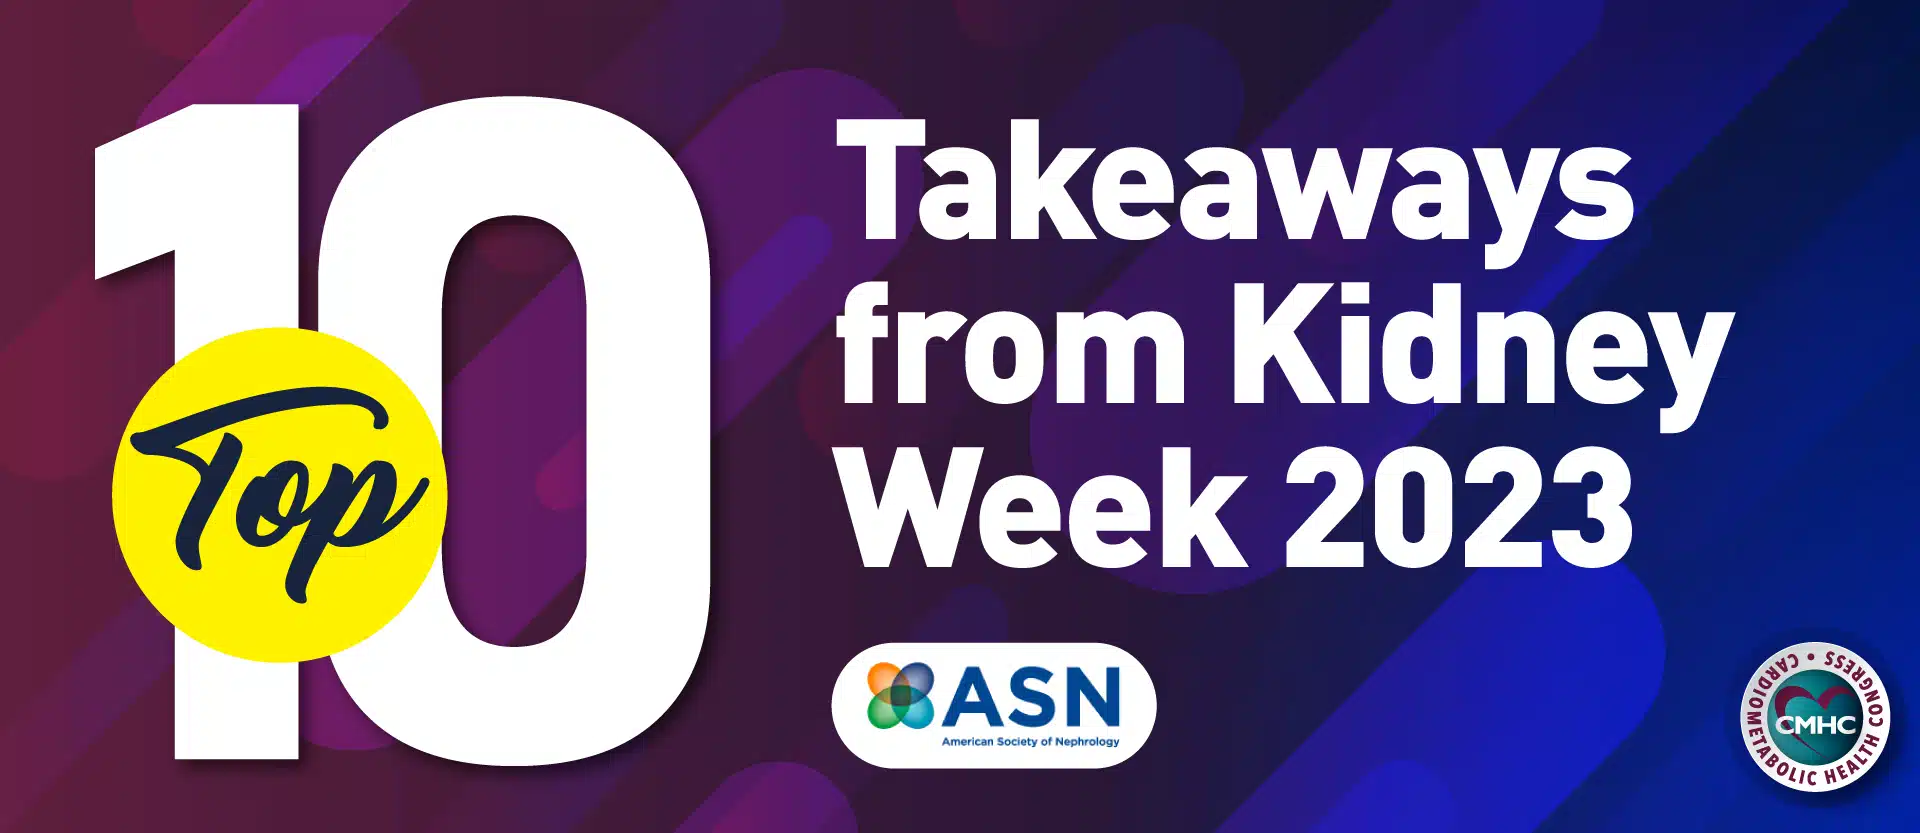 Kidney Week 2023: Top Ten Takeaways